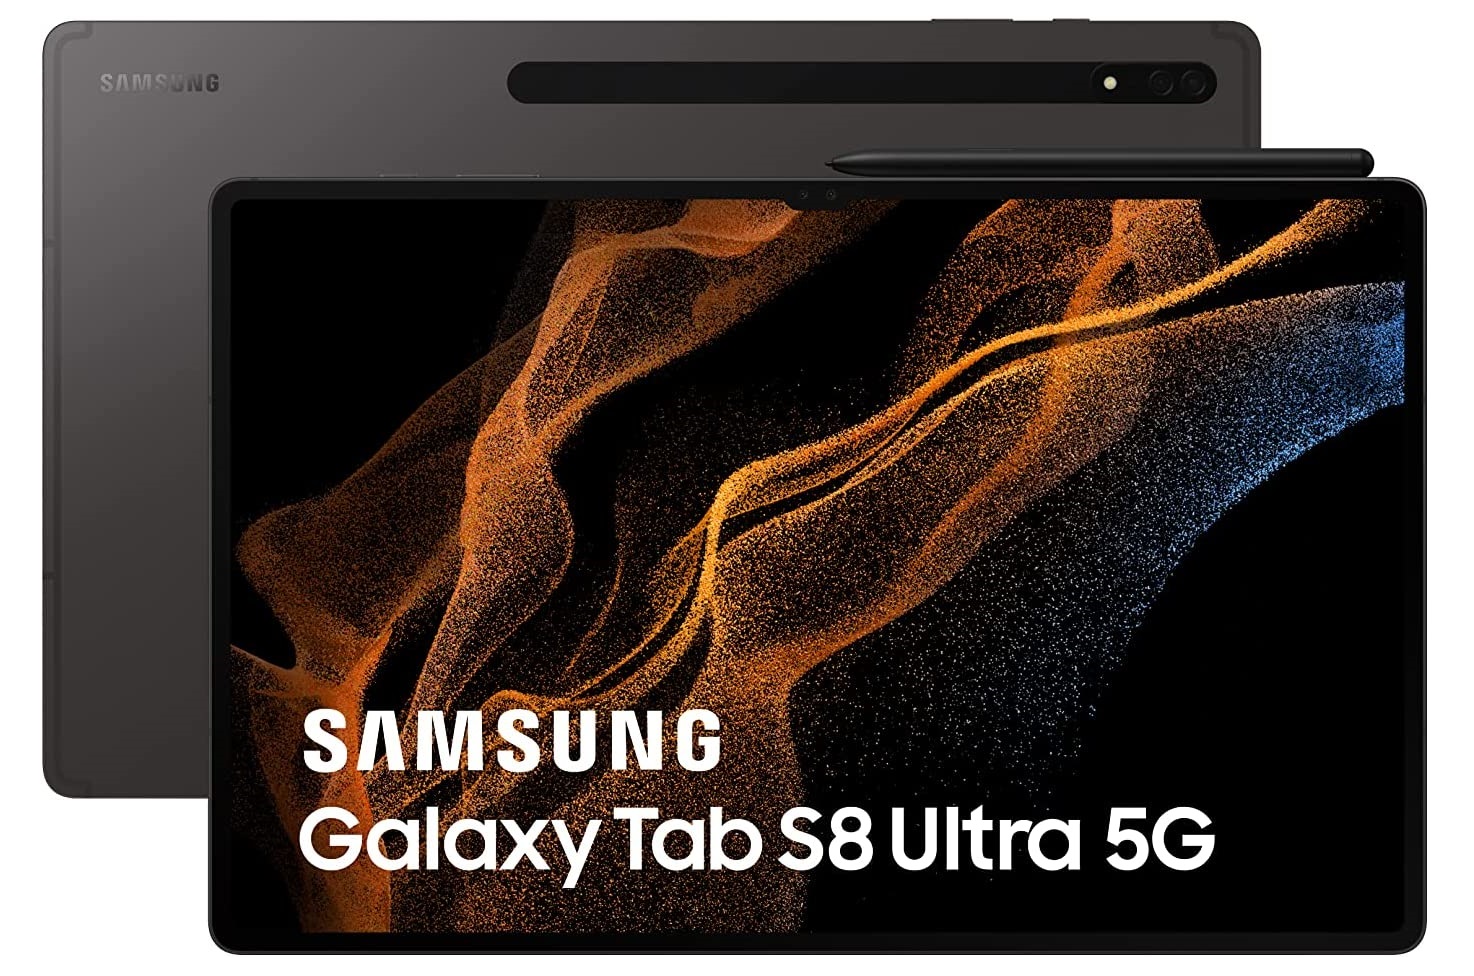 Samsung - Tablette Galaxy Tab S8 WiFi 128 Go 11 S-Pen inclus - Argent